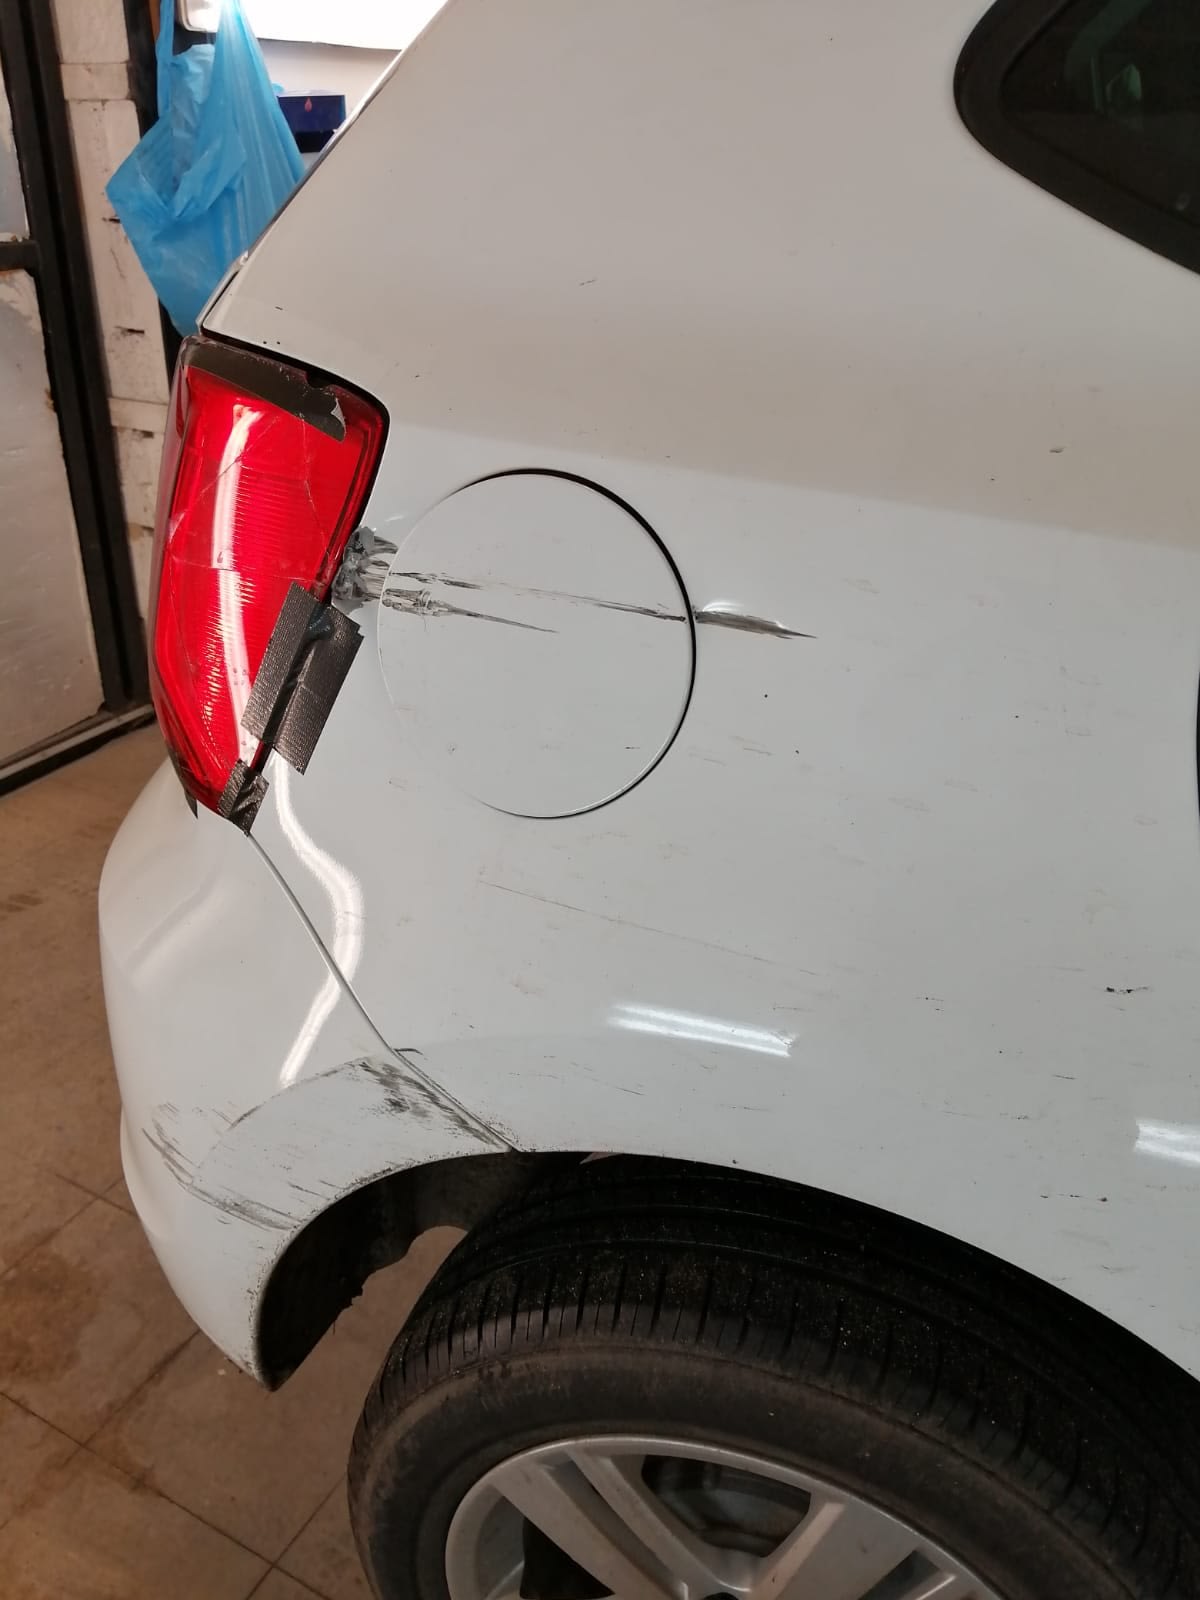 Images SCUFF-FiX Car Paint Repairs